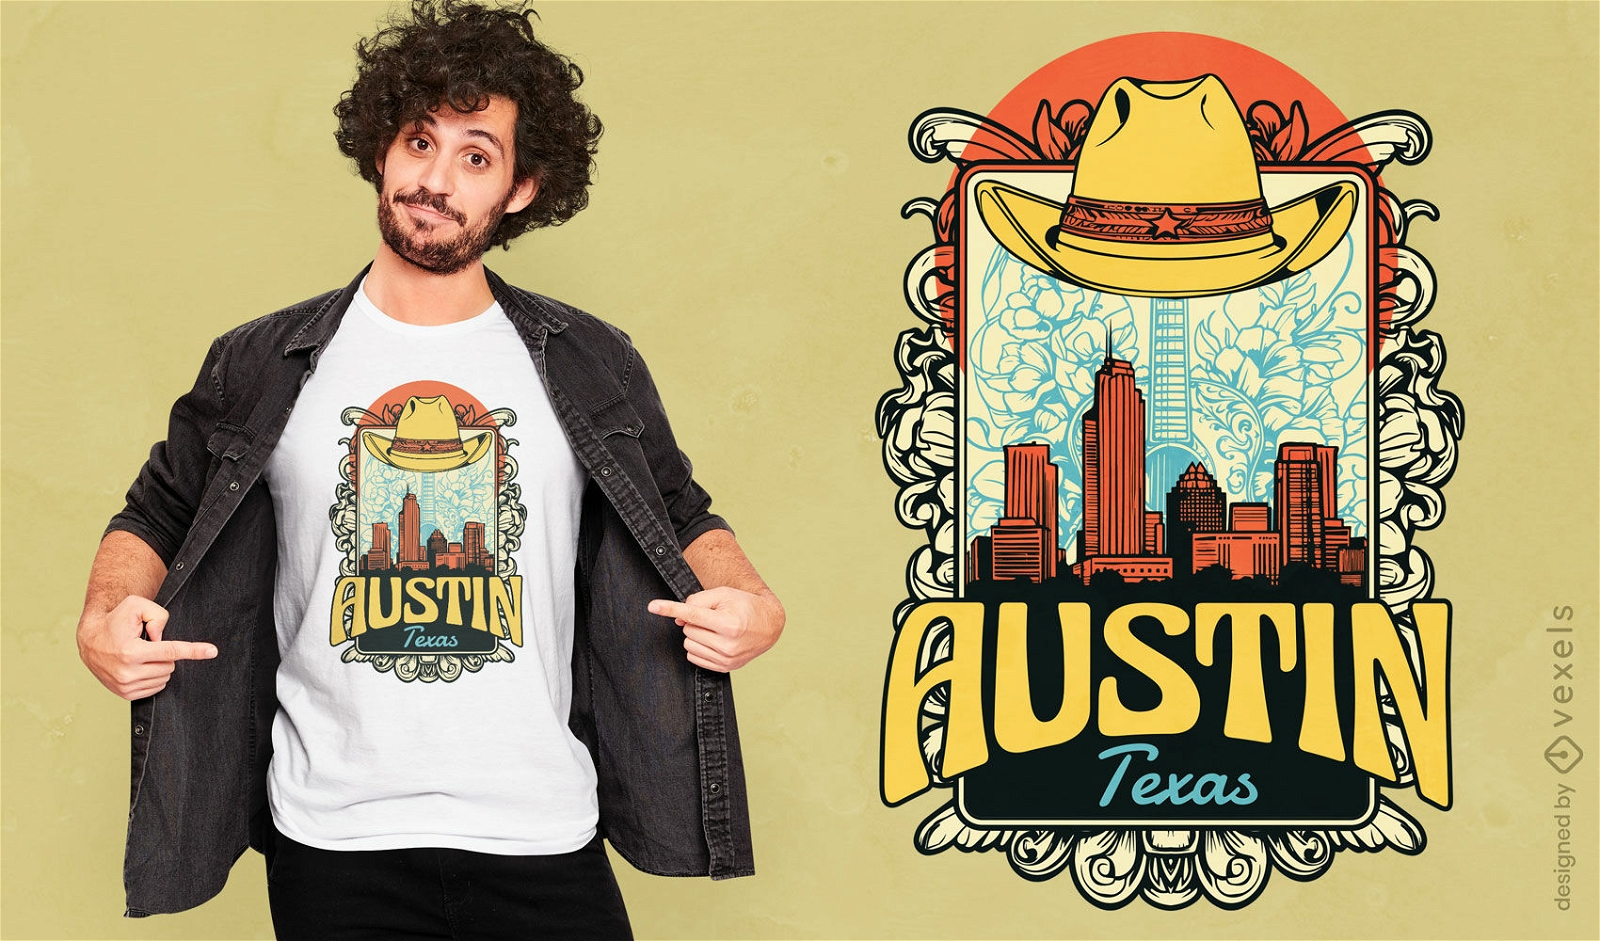 Austin Texas t-shirt design